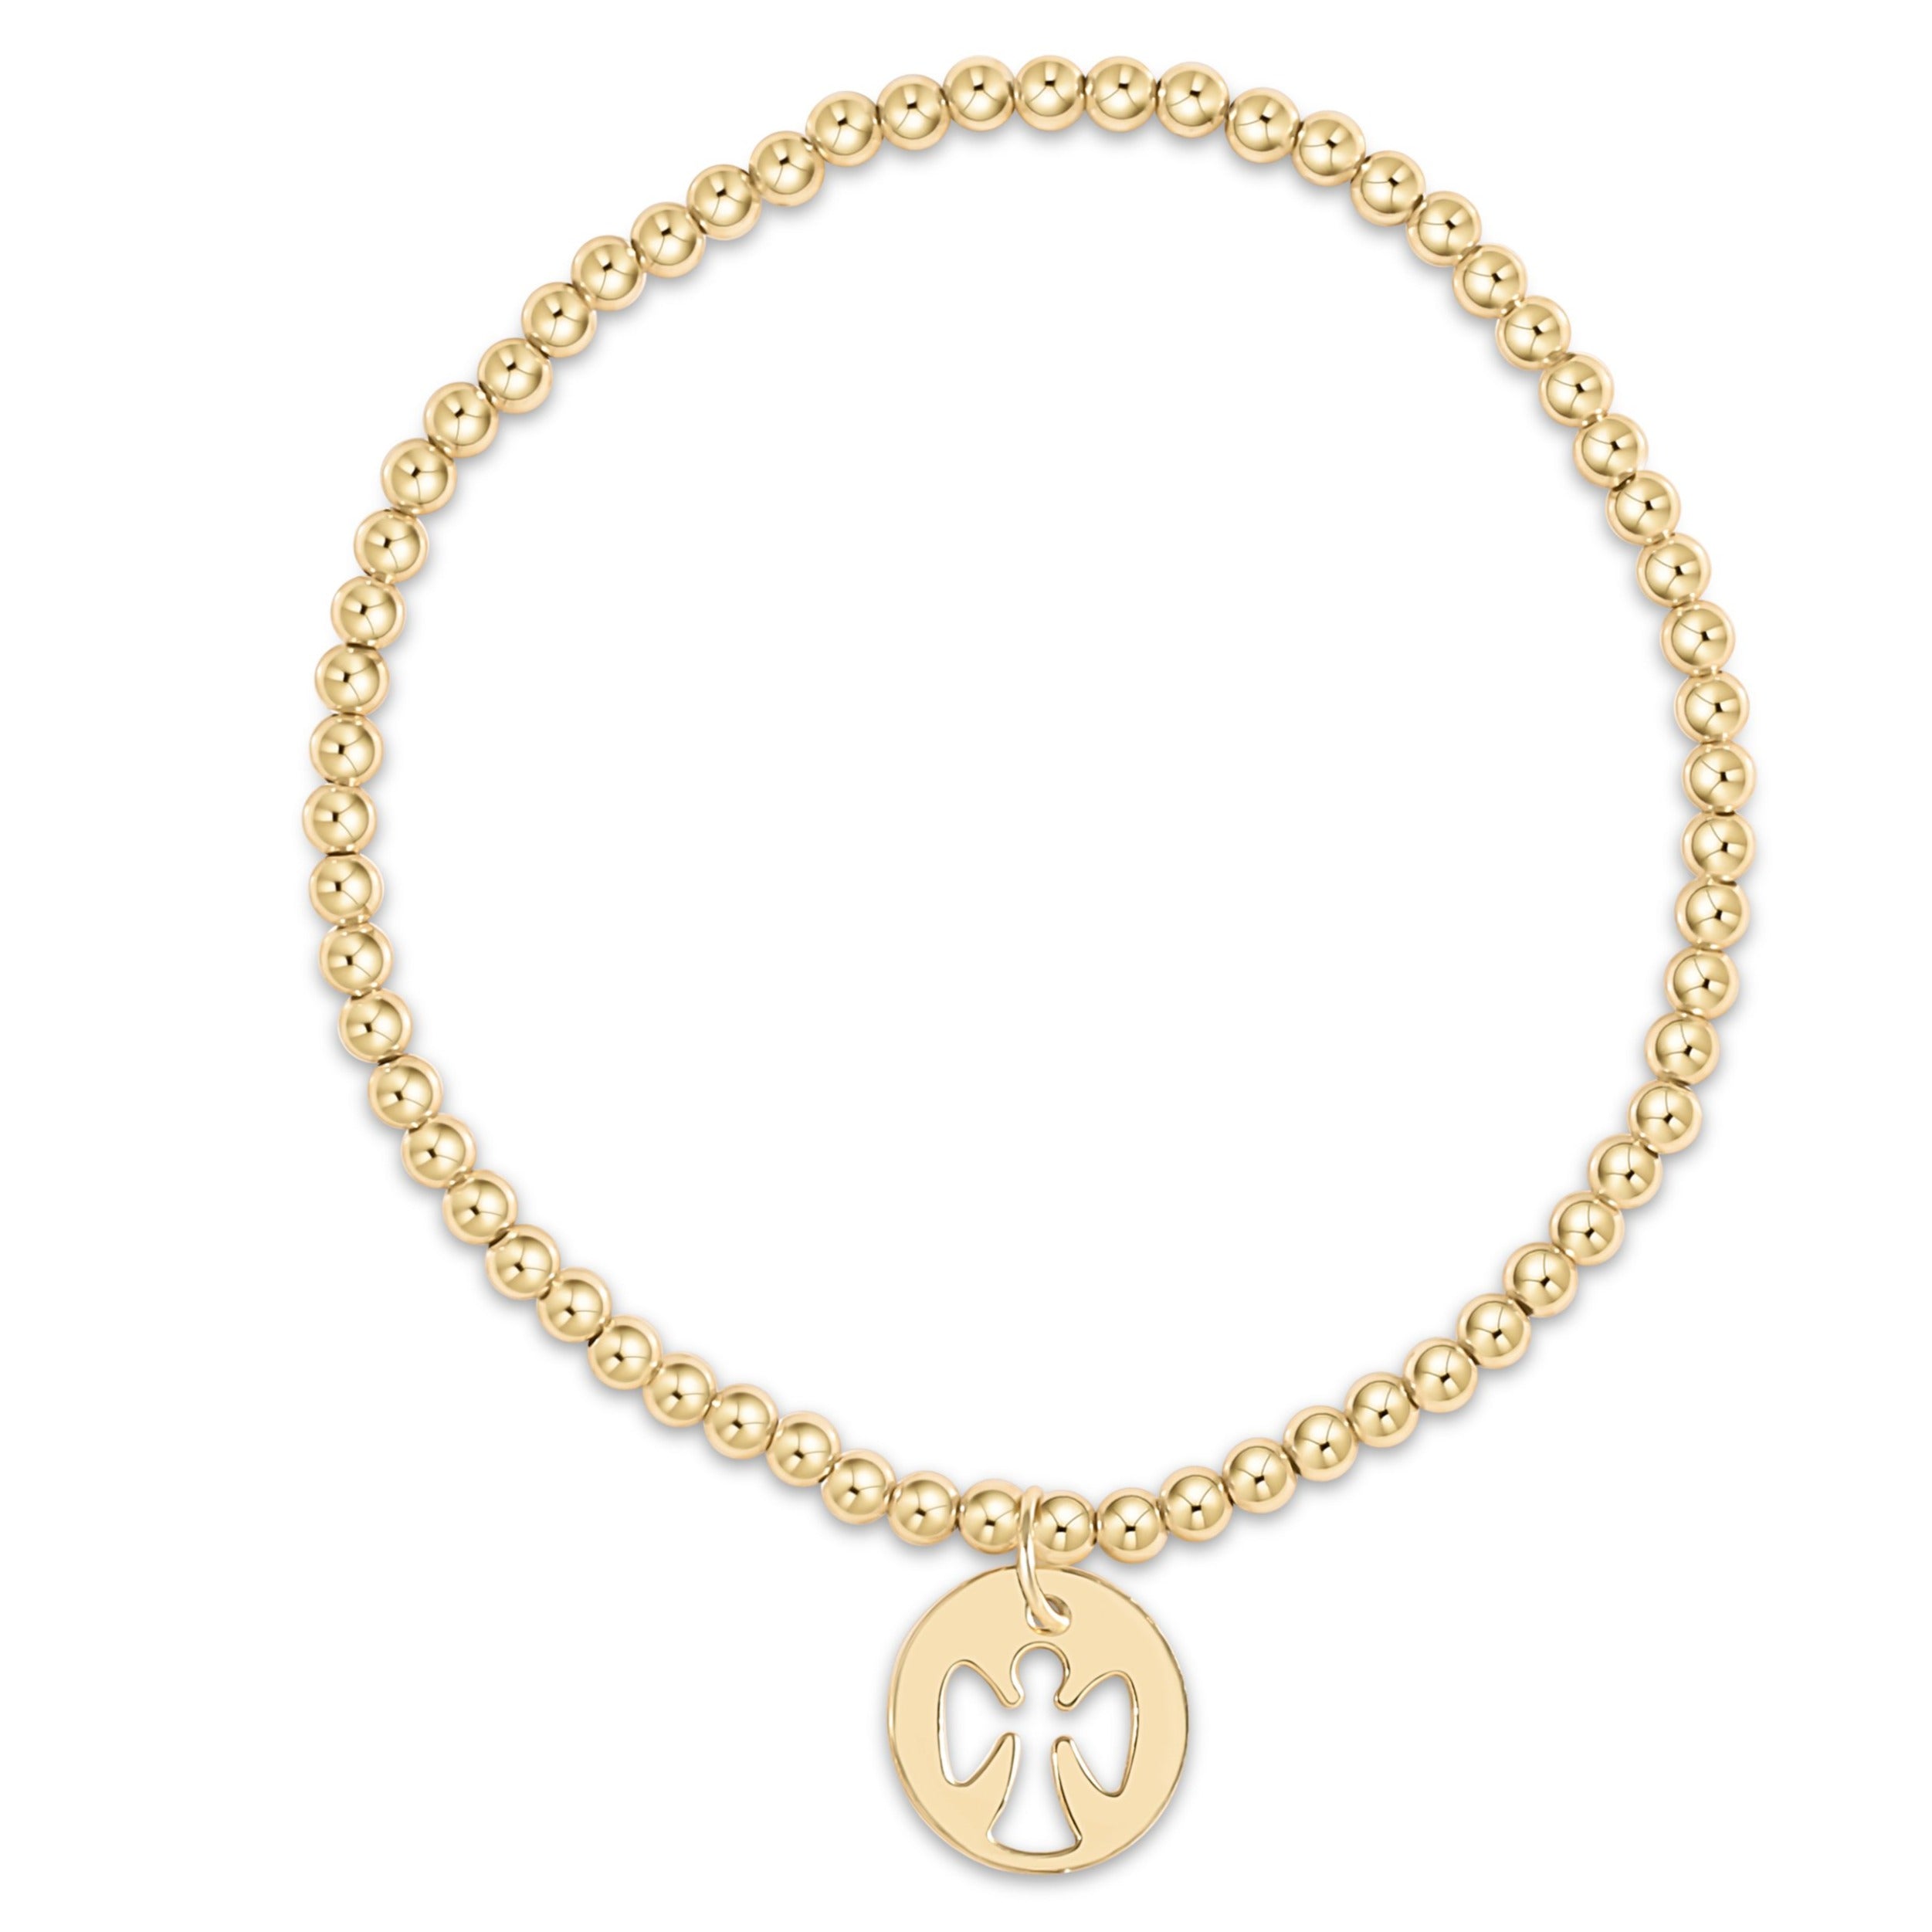 enewton extends - classic gold 3mm bead bracelet - guardian angel gold charm